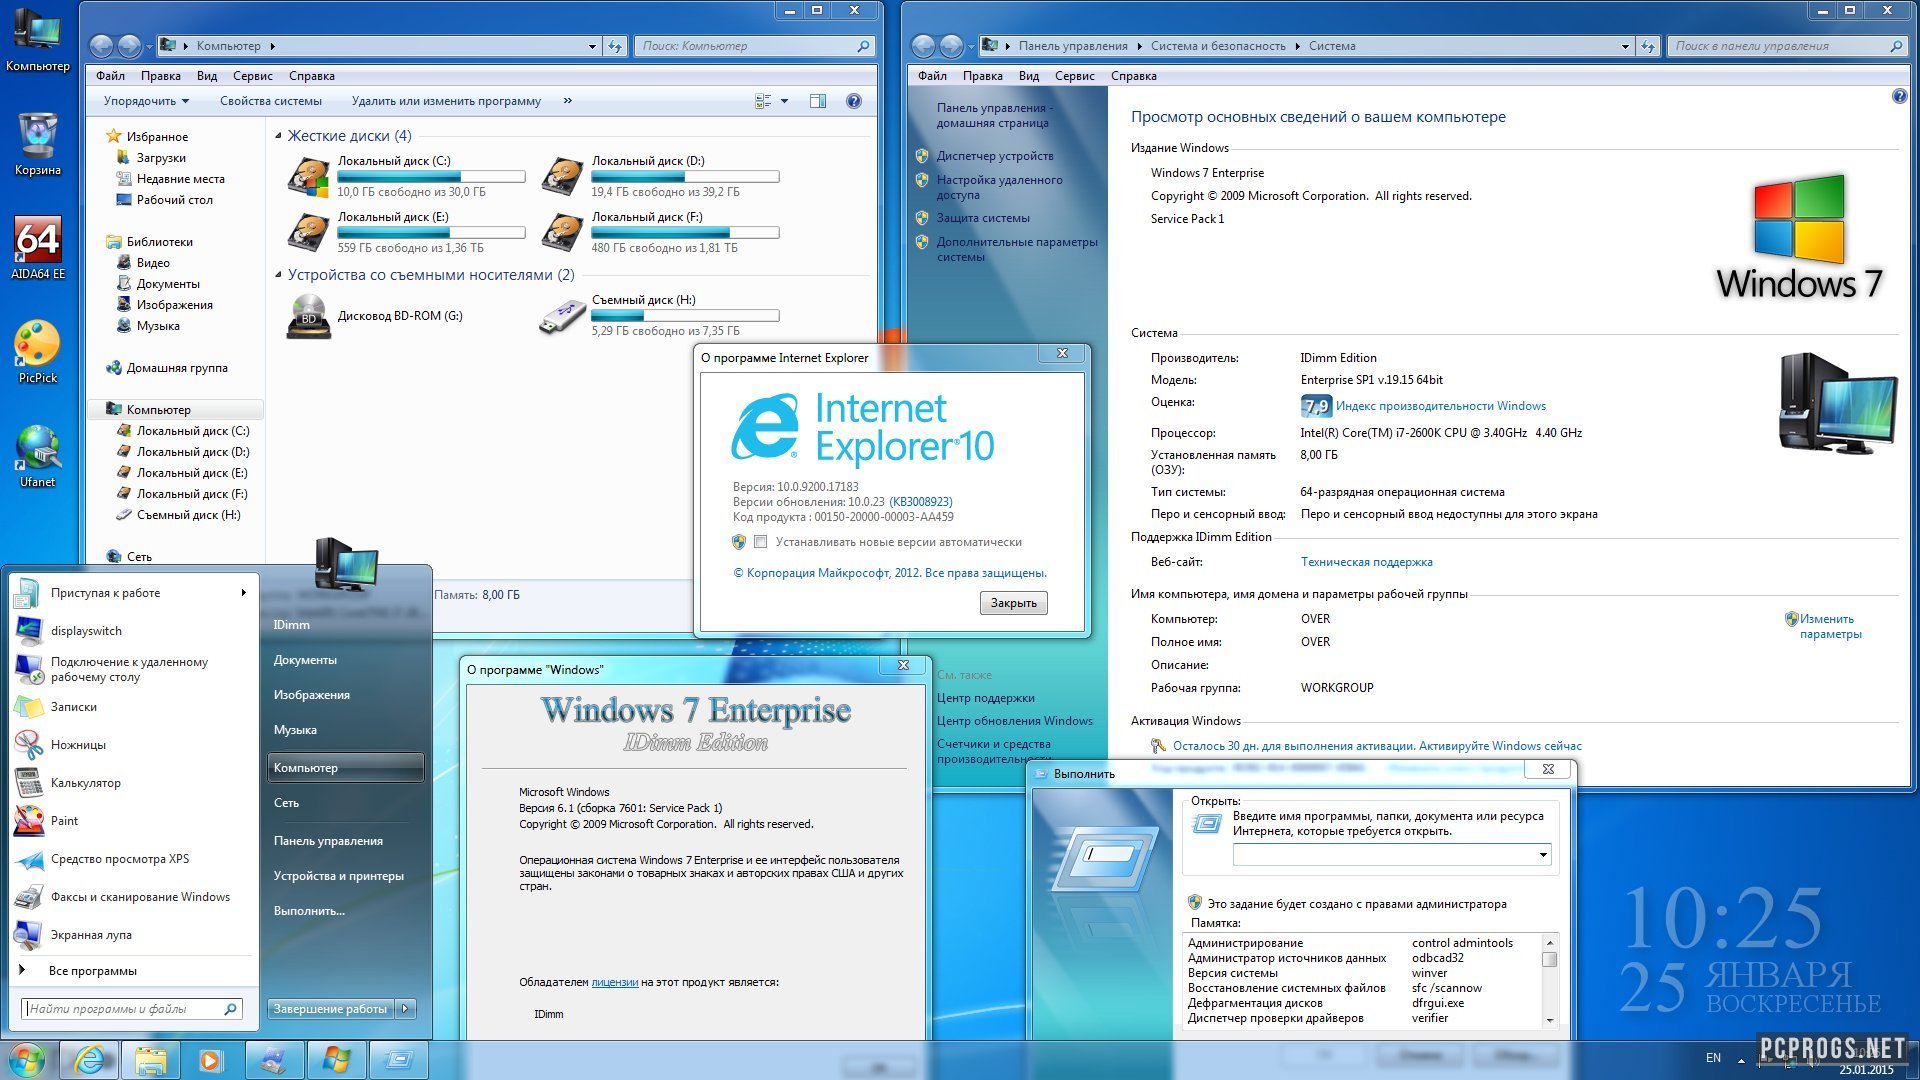 10 x64 x86 версии. Windows 7 Enterprise x64. Пакет обновления Windows 7. Windows 10 описание. Windows_7_Enterprise_sp1_x64_Rus_23.01.20.